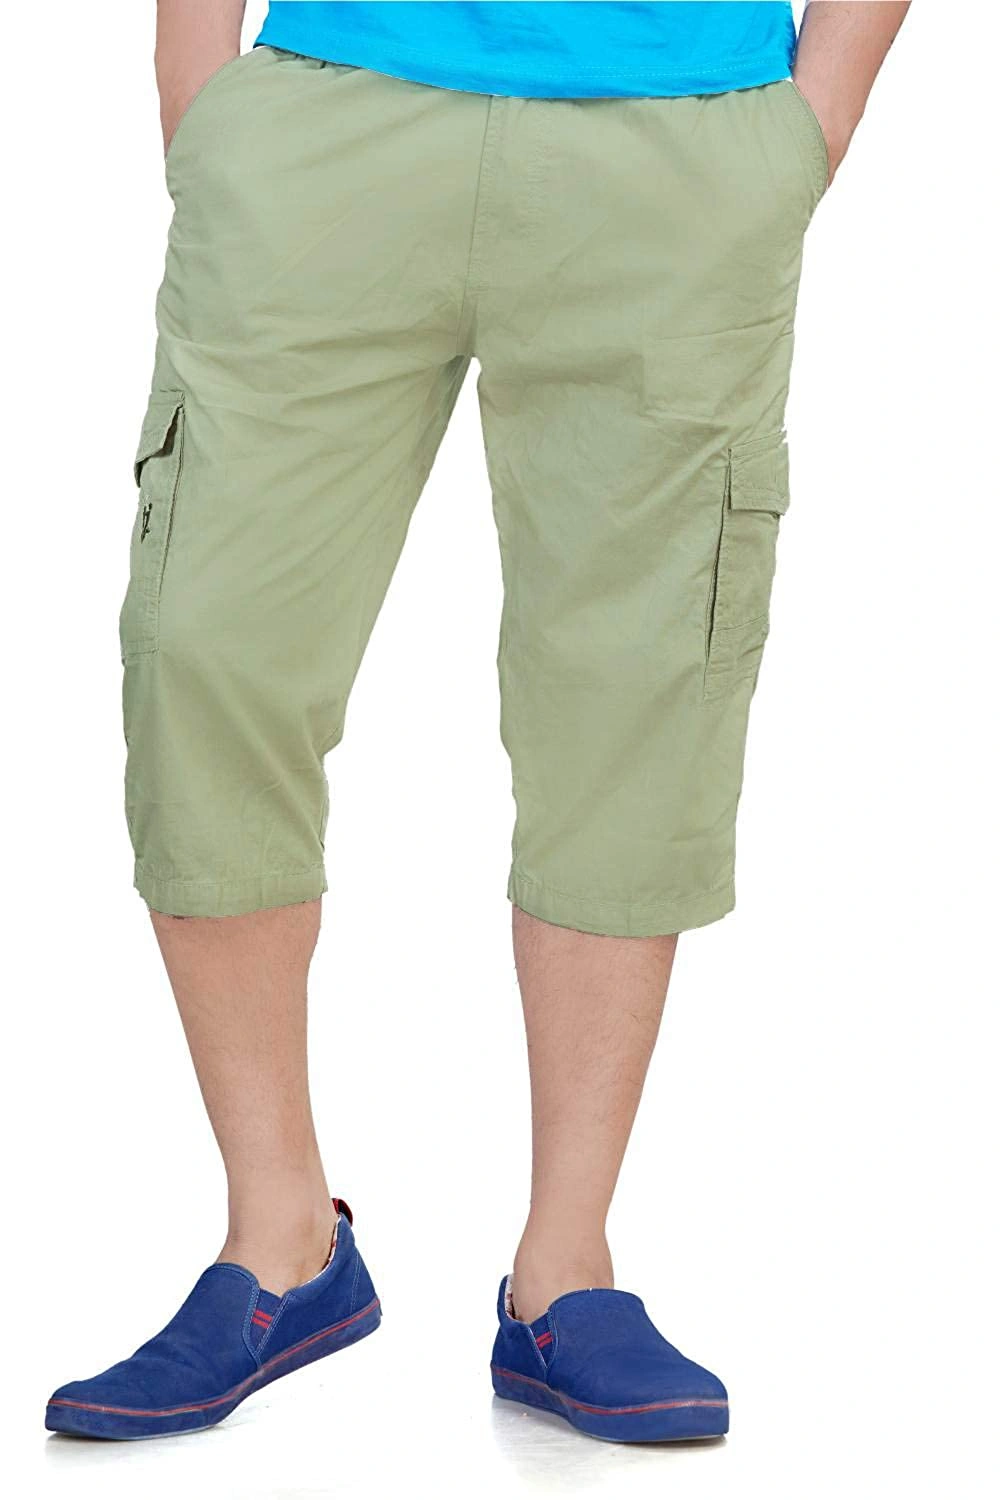 Cheap 3 Quarter Length Trousers Outlet Online Store For Peter  StormRabBerghaus  Miomana